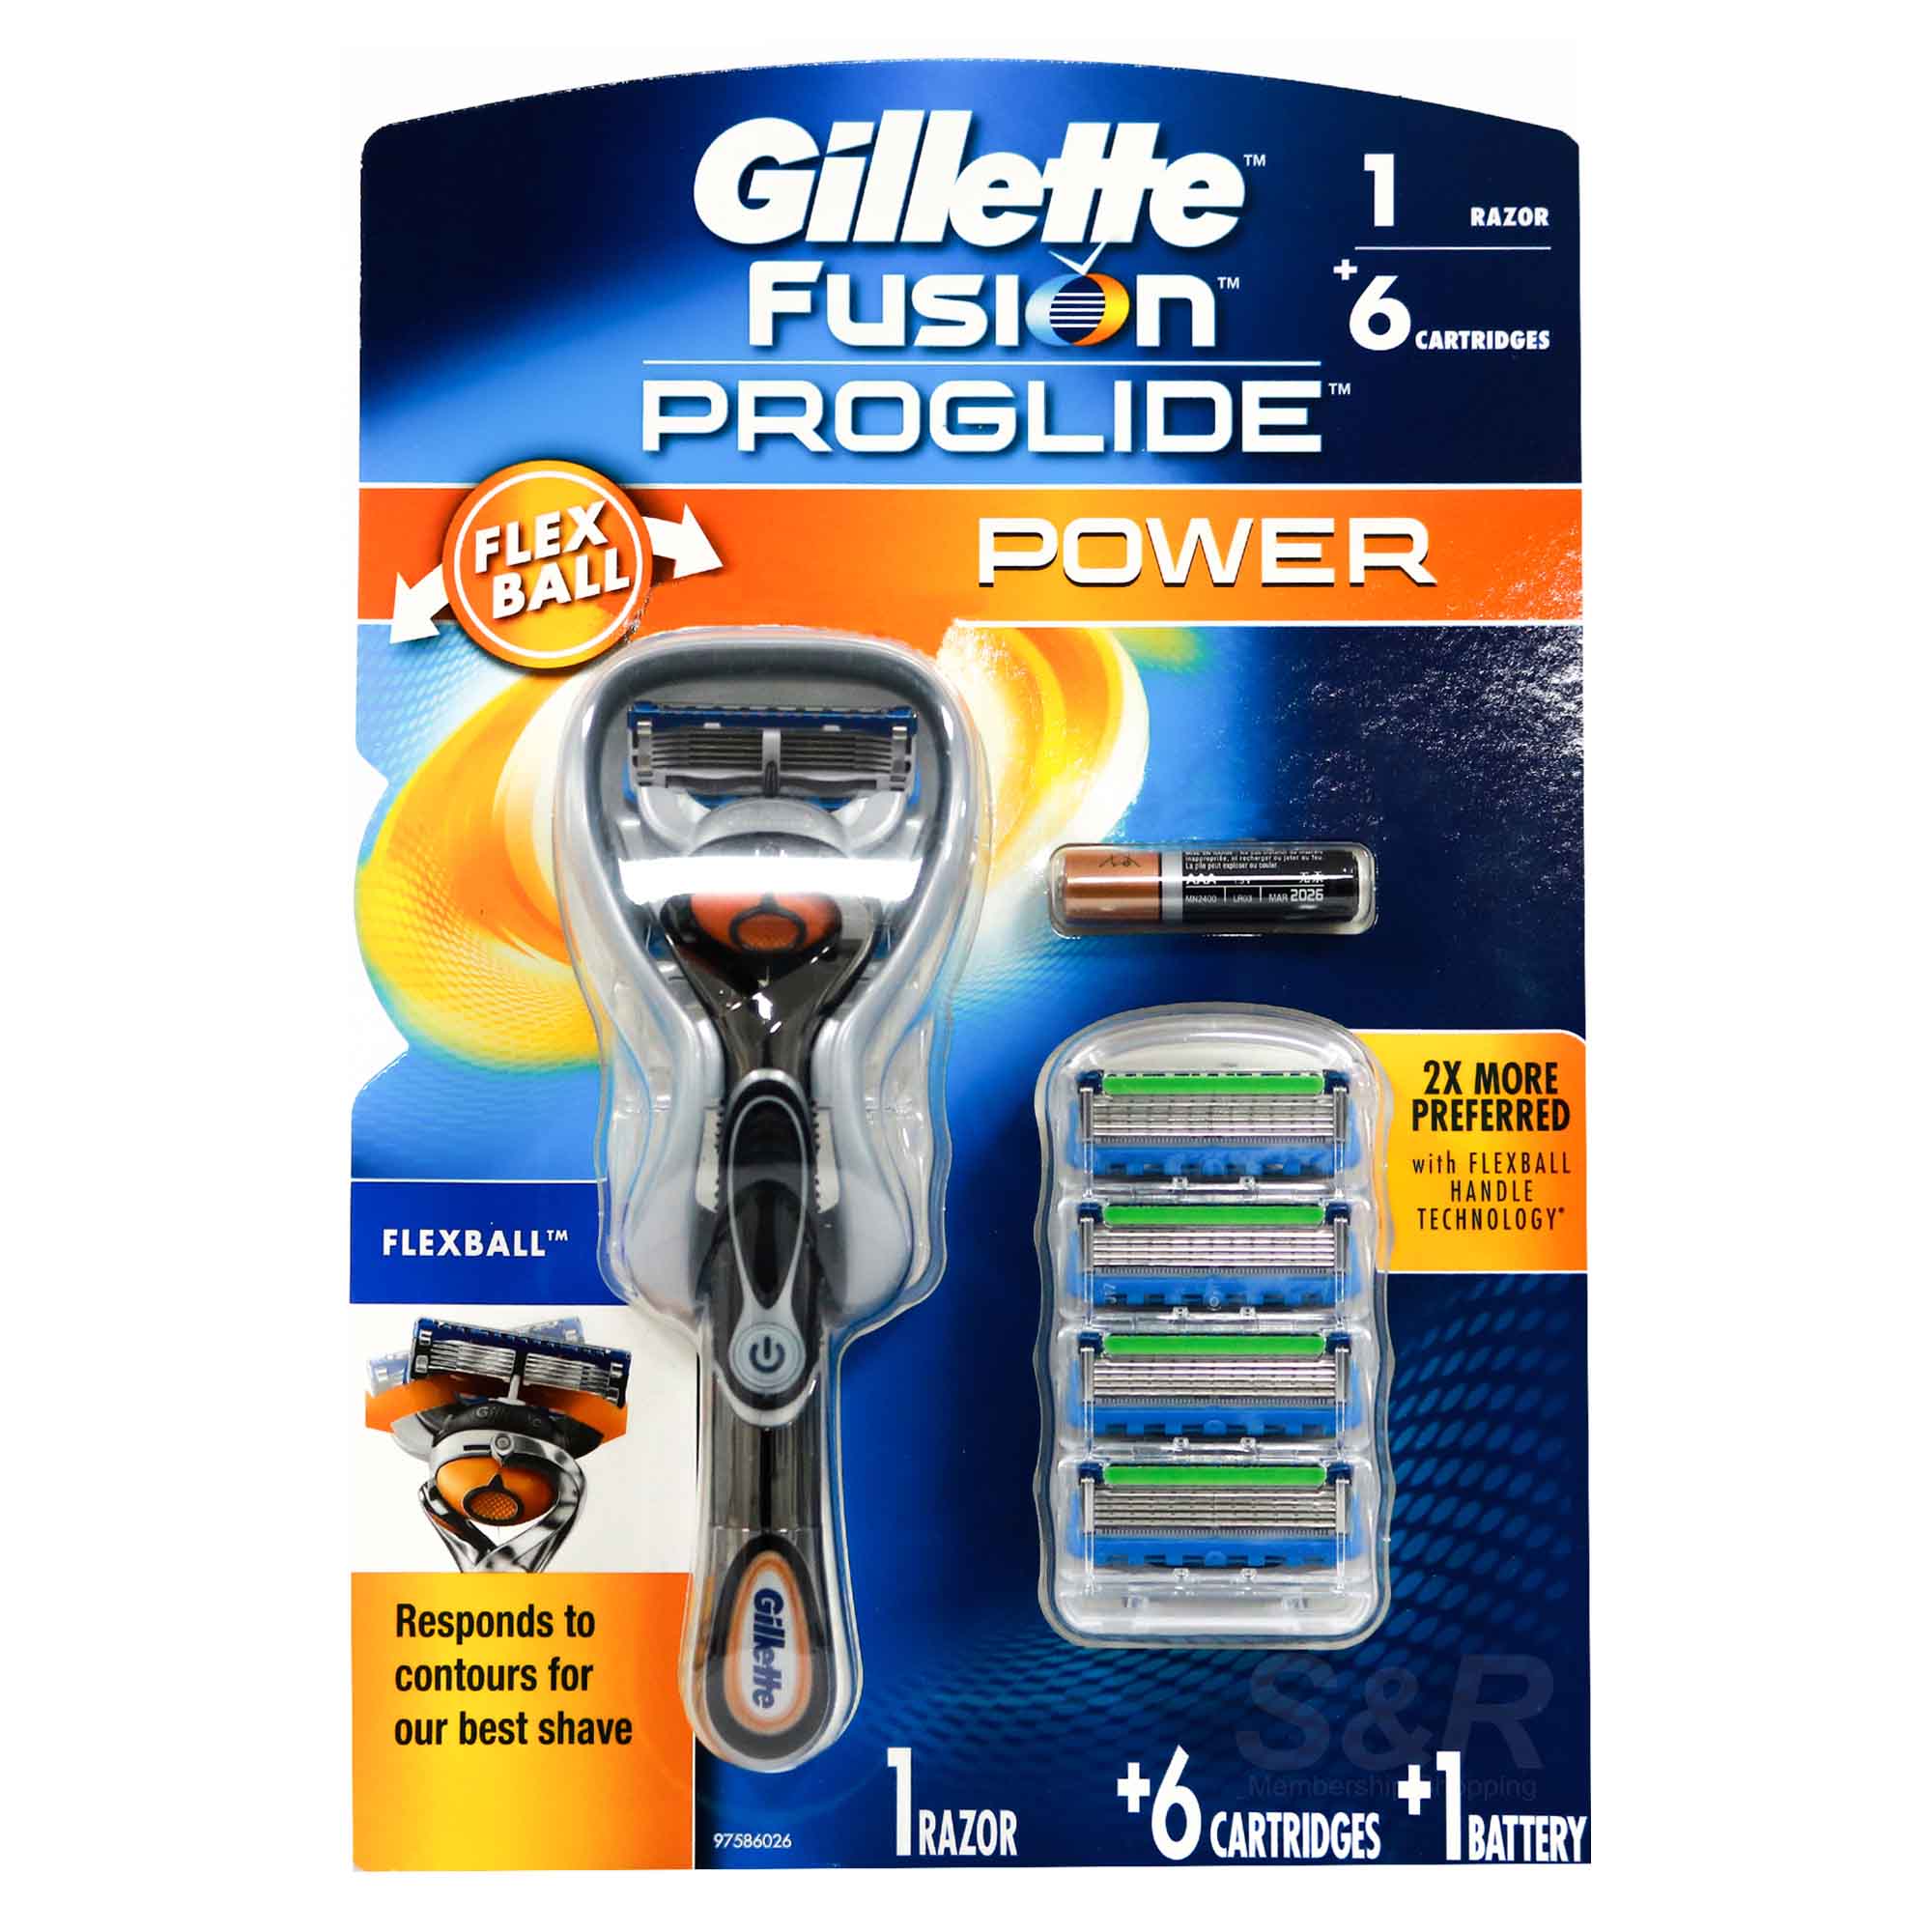 Gillette Fusion Proglide Power Razor and Cartridges 1 set